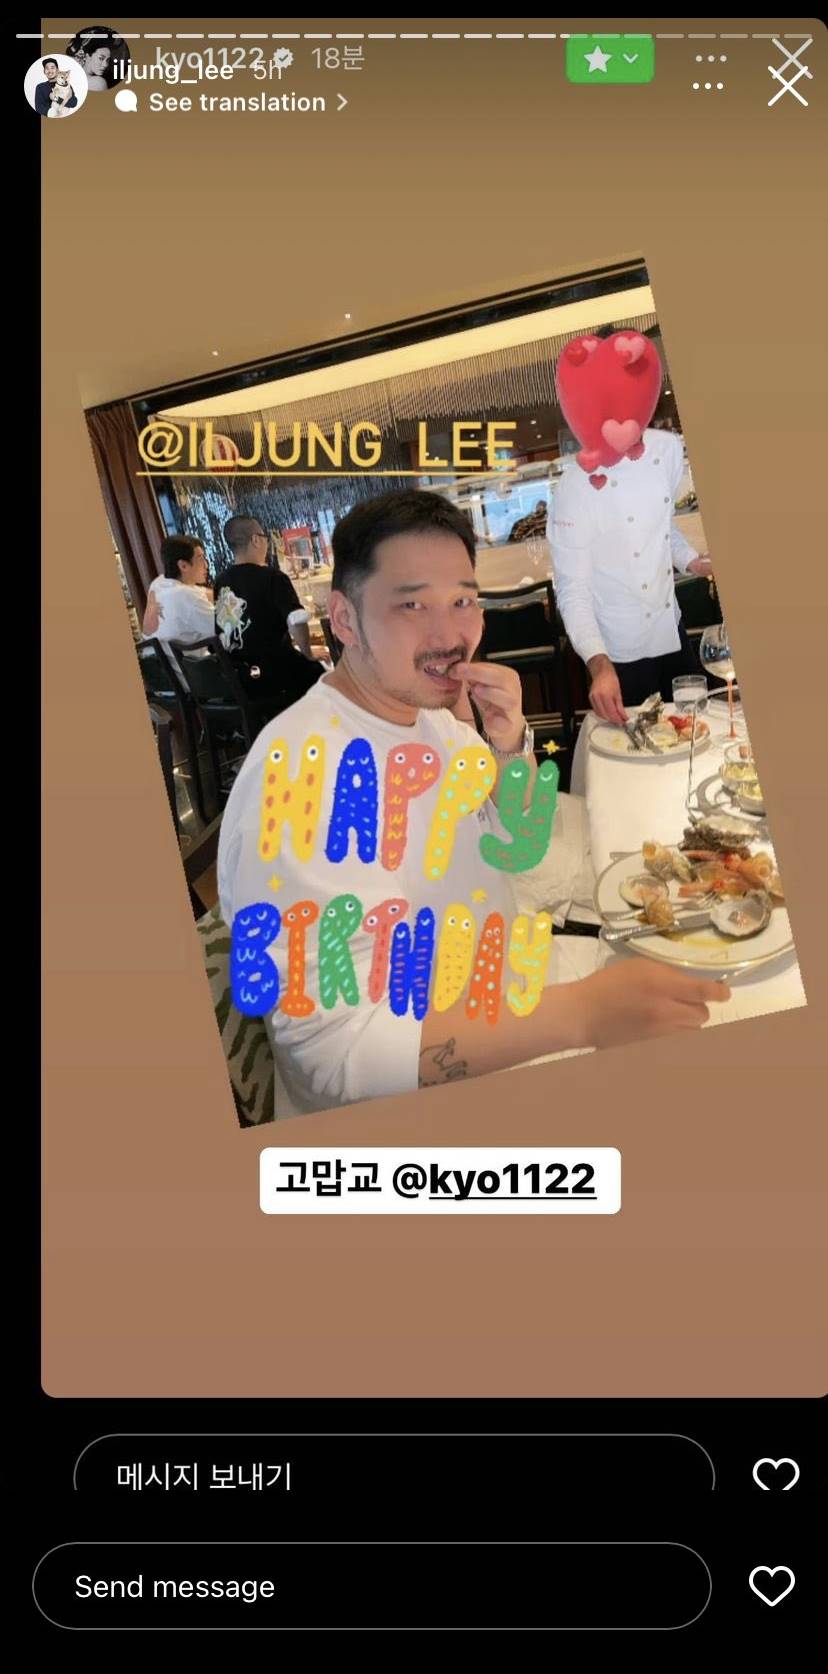 Song Hye Kyo mengucapkan selamat ulang tahun kepada Lee Il Jung